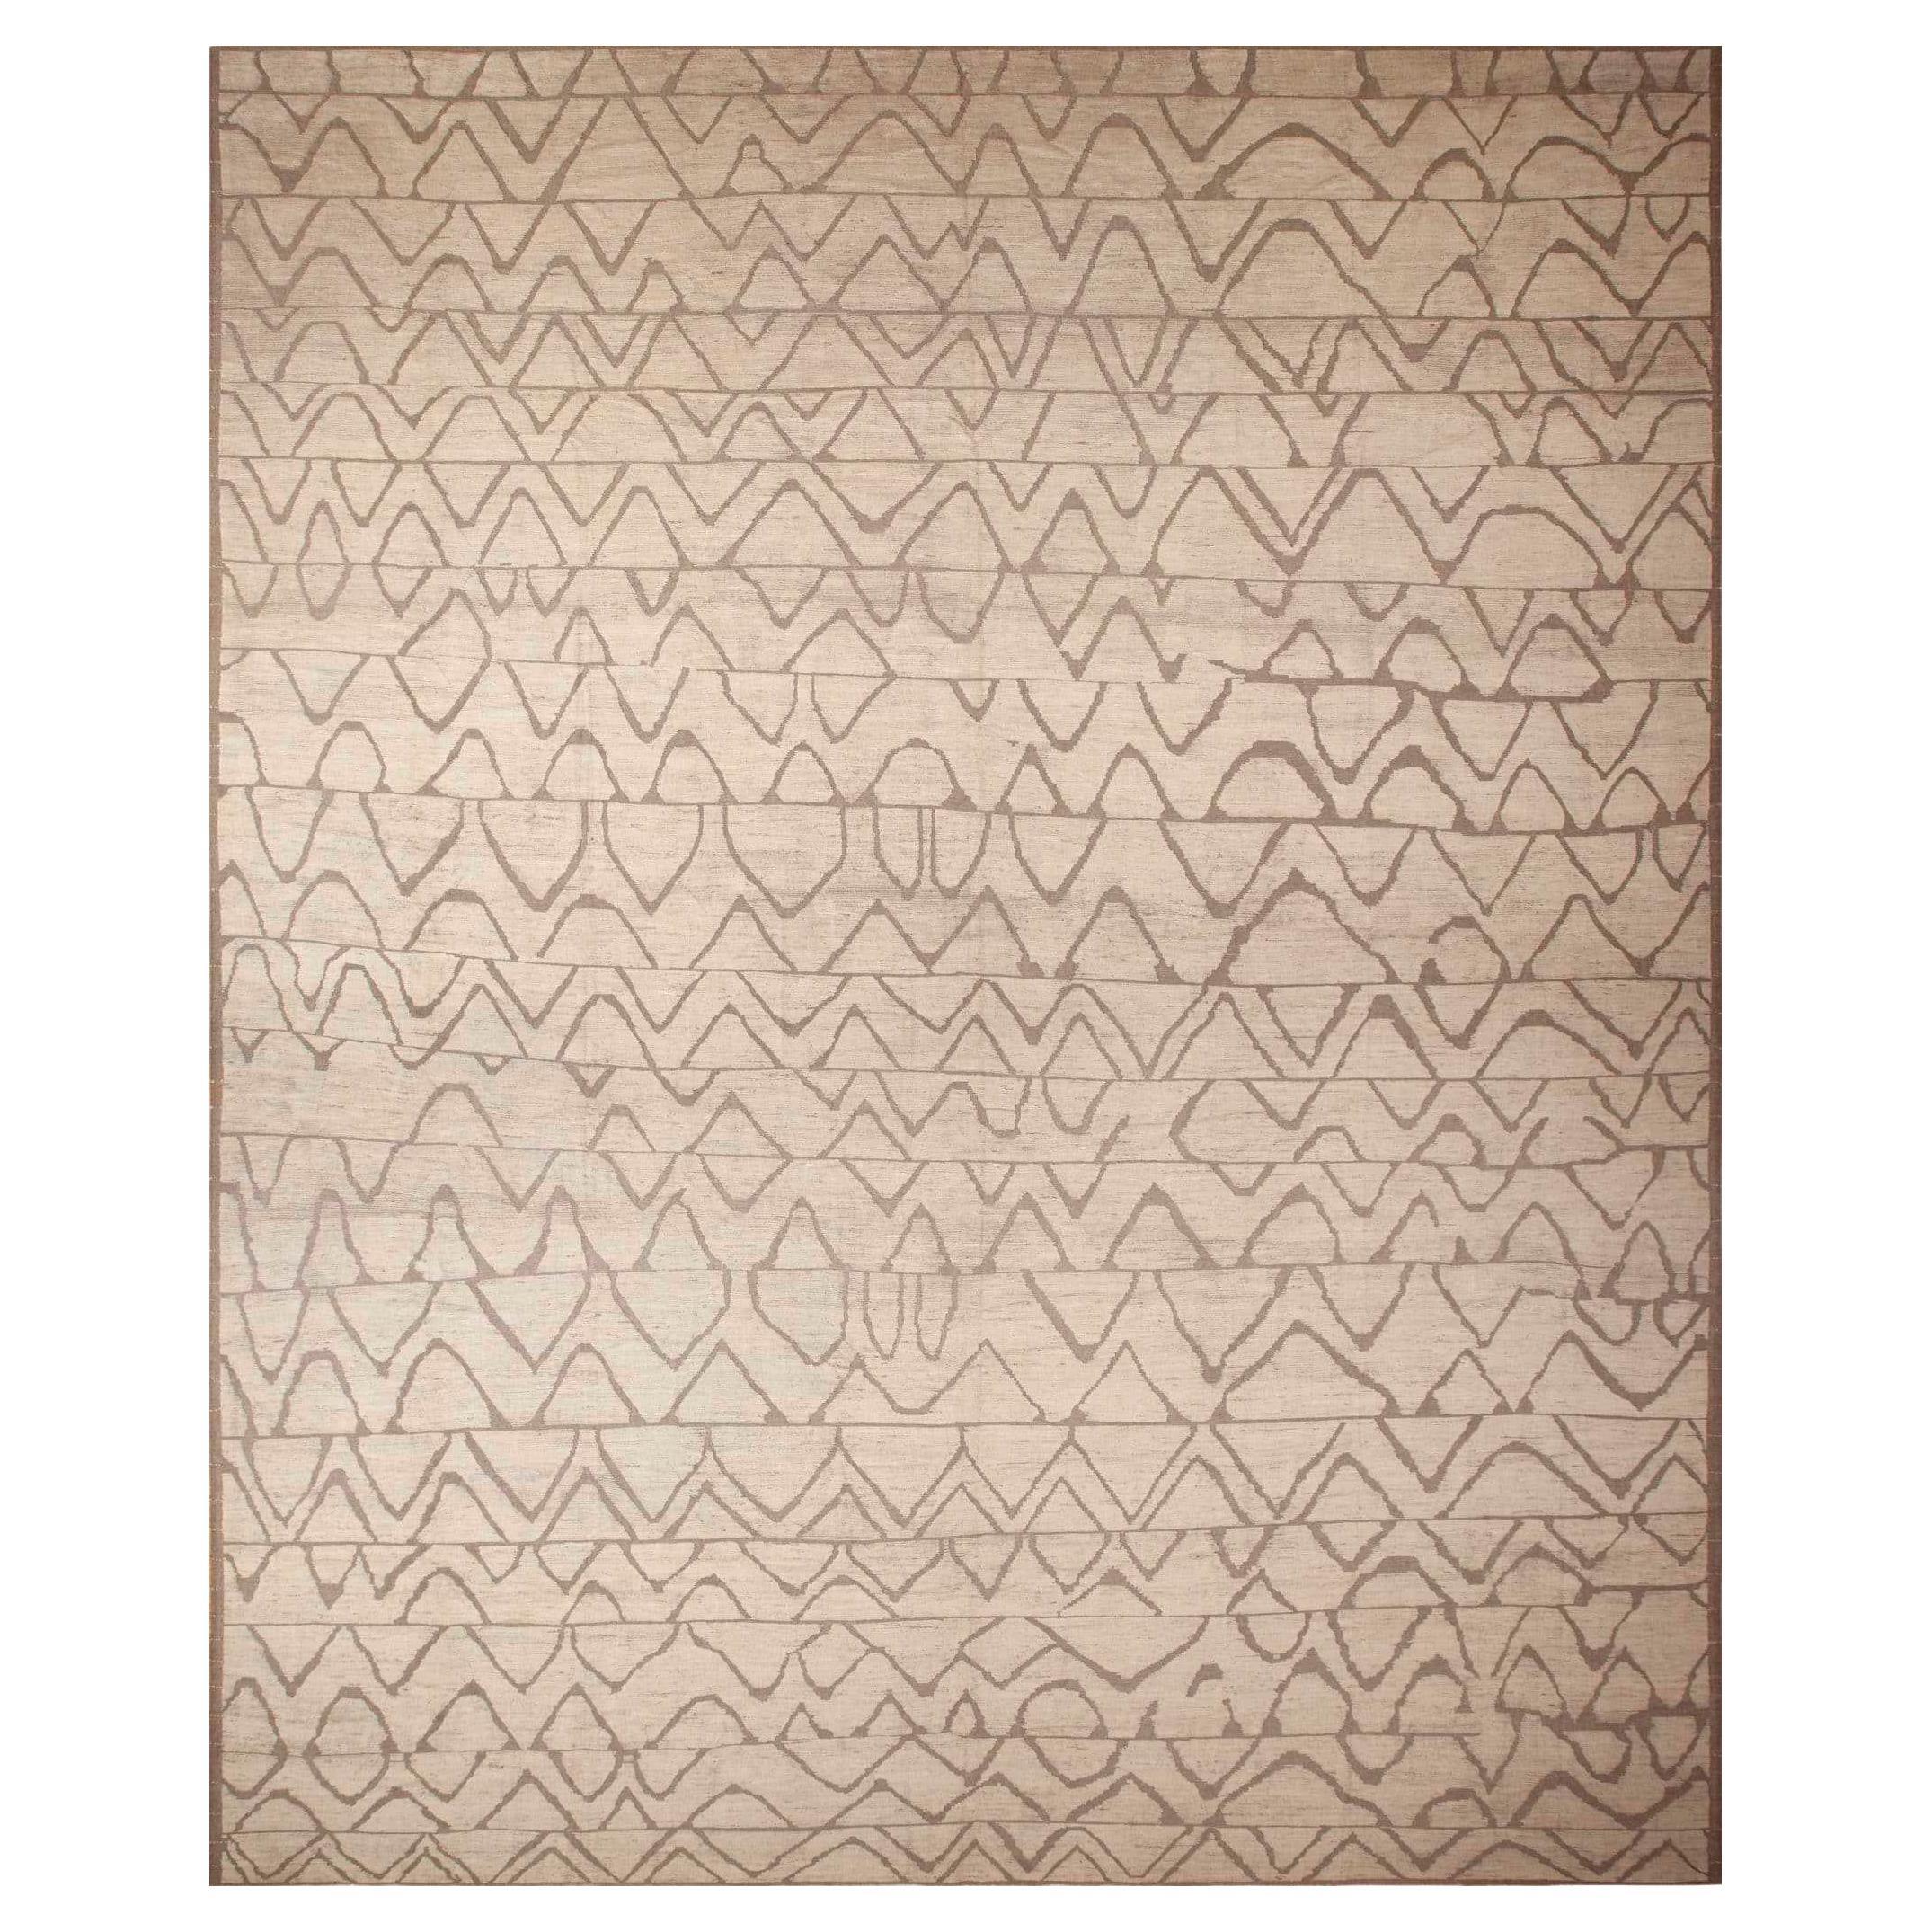 Collection Nazmiyal - Design tribal clair - Tapis moderne de 20' x 24'4" en vente